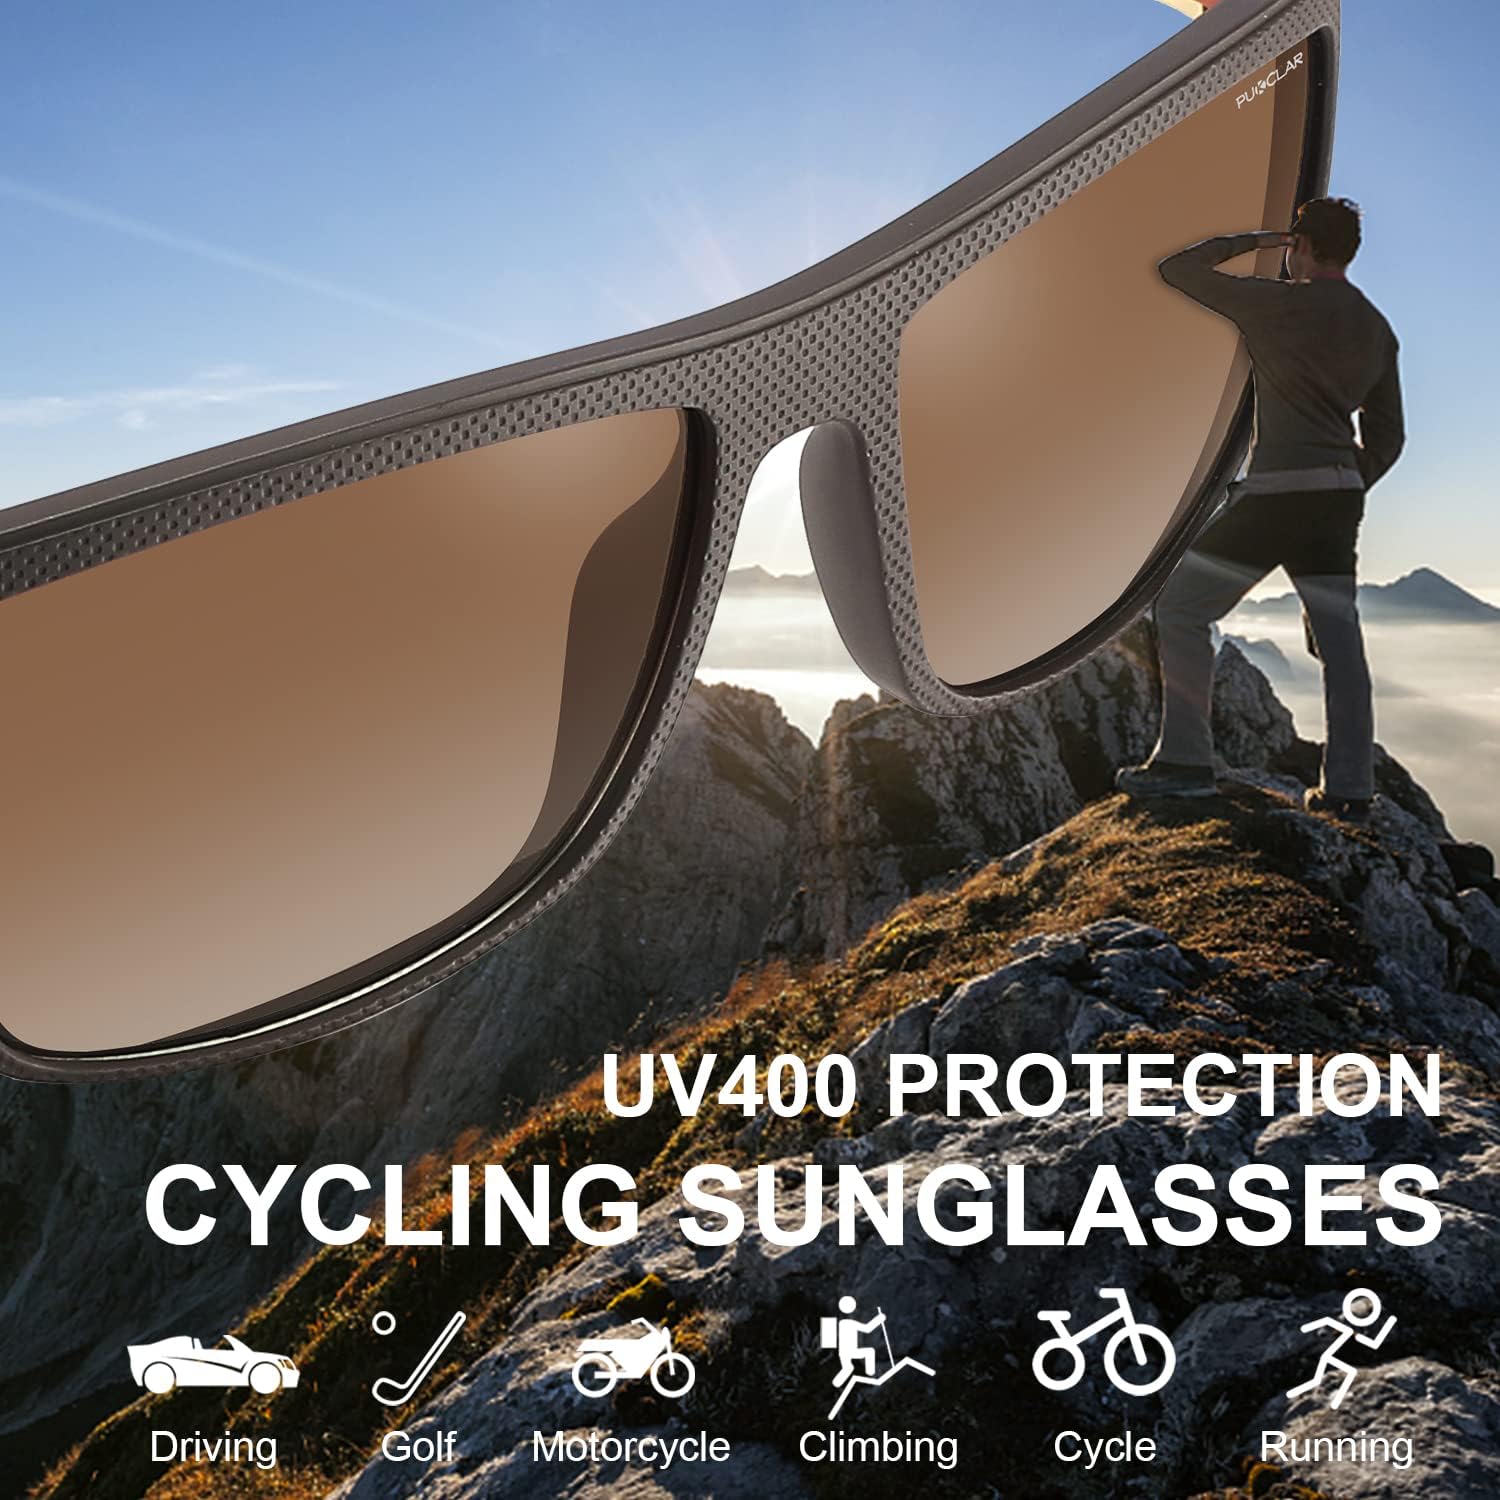 PUKCLAR Sunglasses for Men Polarized Lightweight TR90 Frame UV400 Spring Hinges Sunglasses, Please identify PUKCLAR